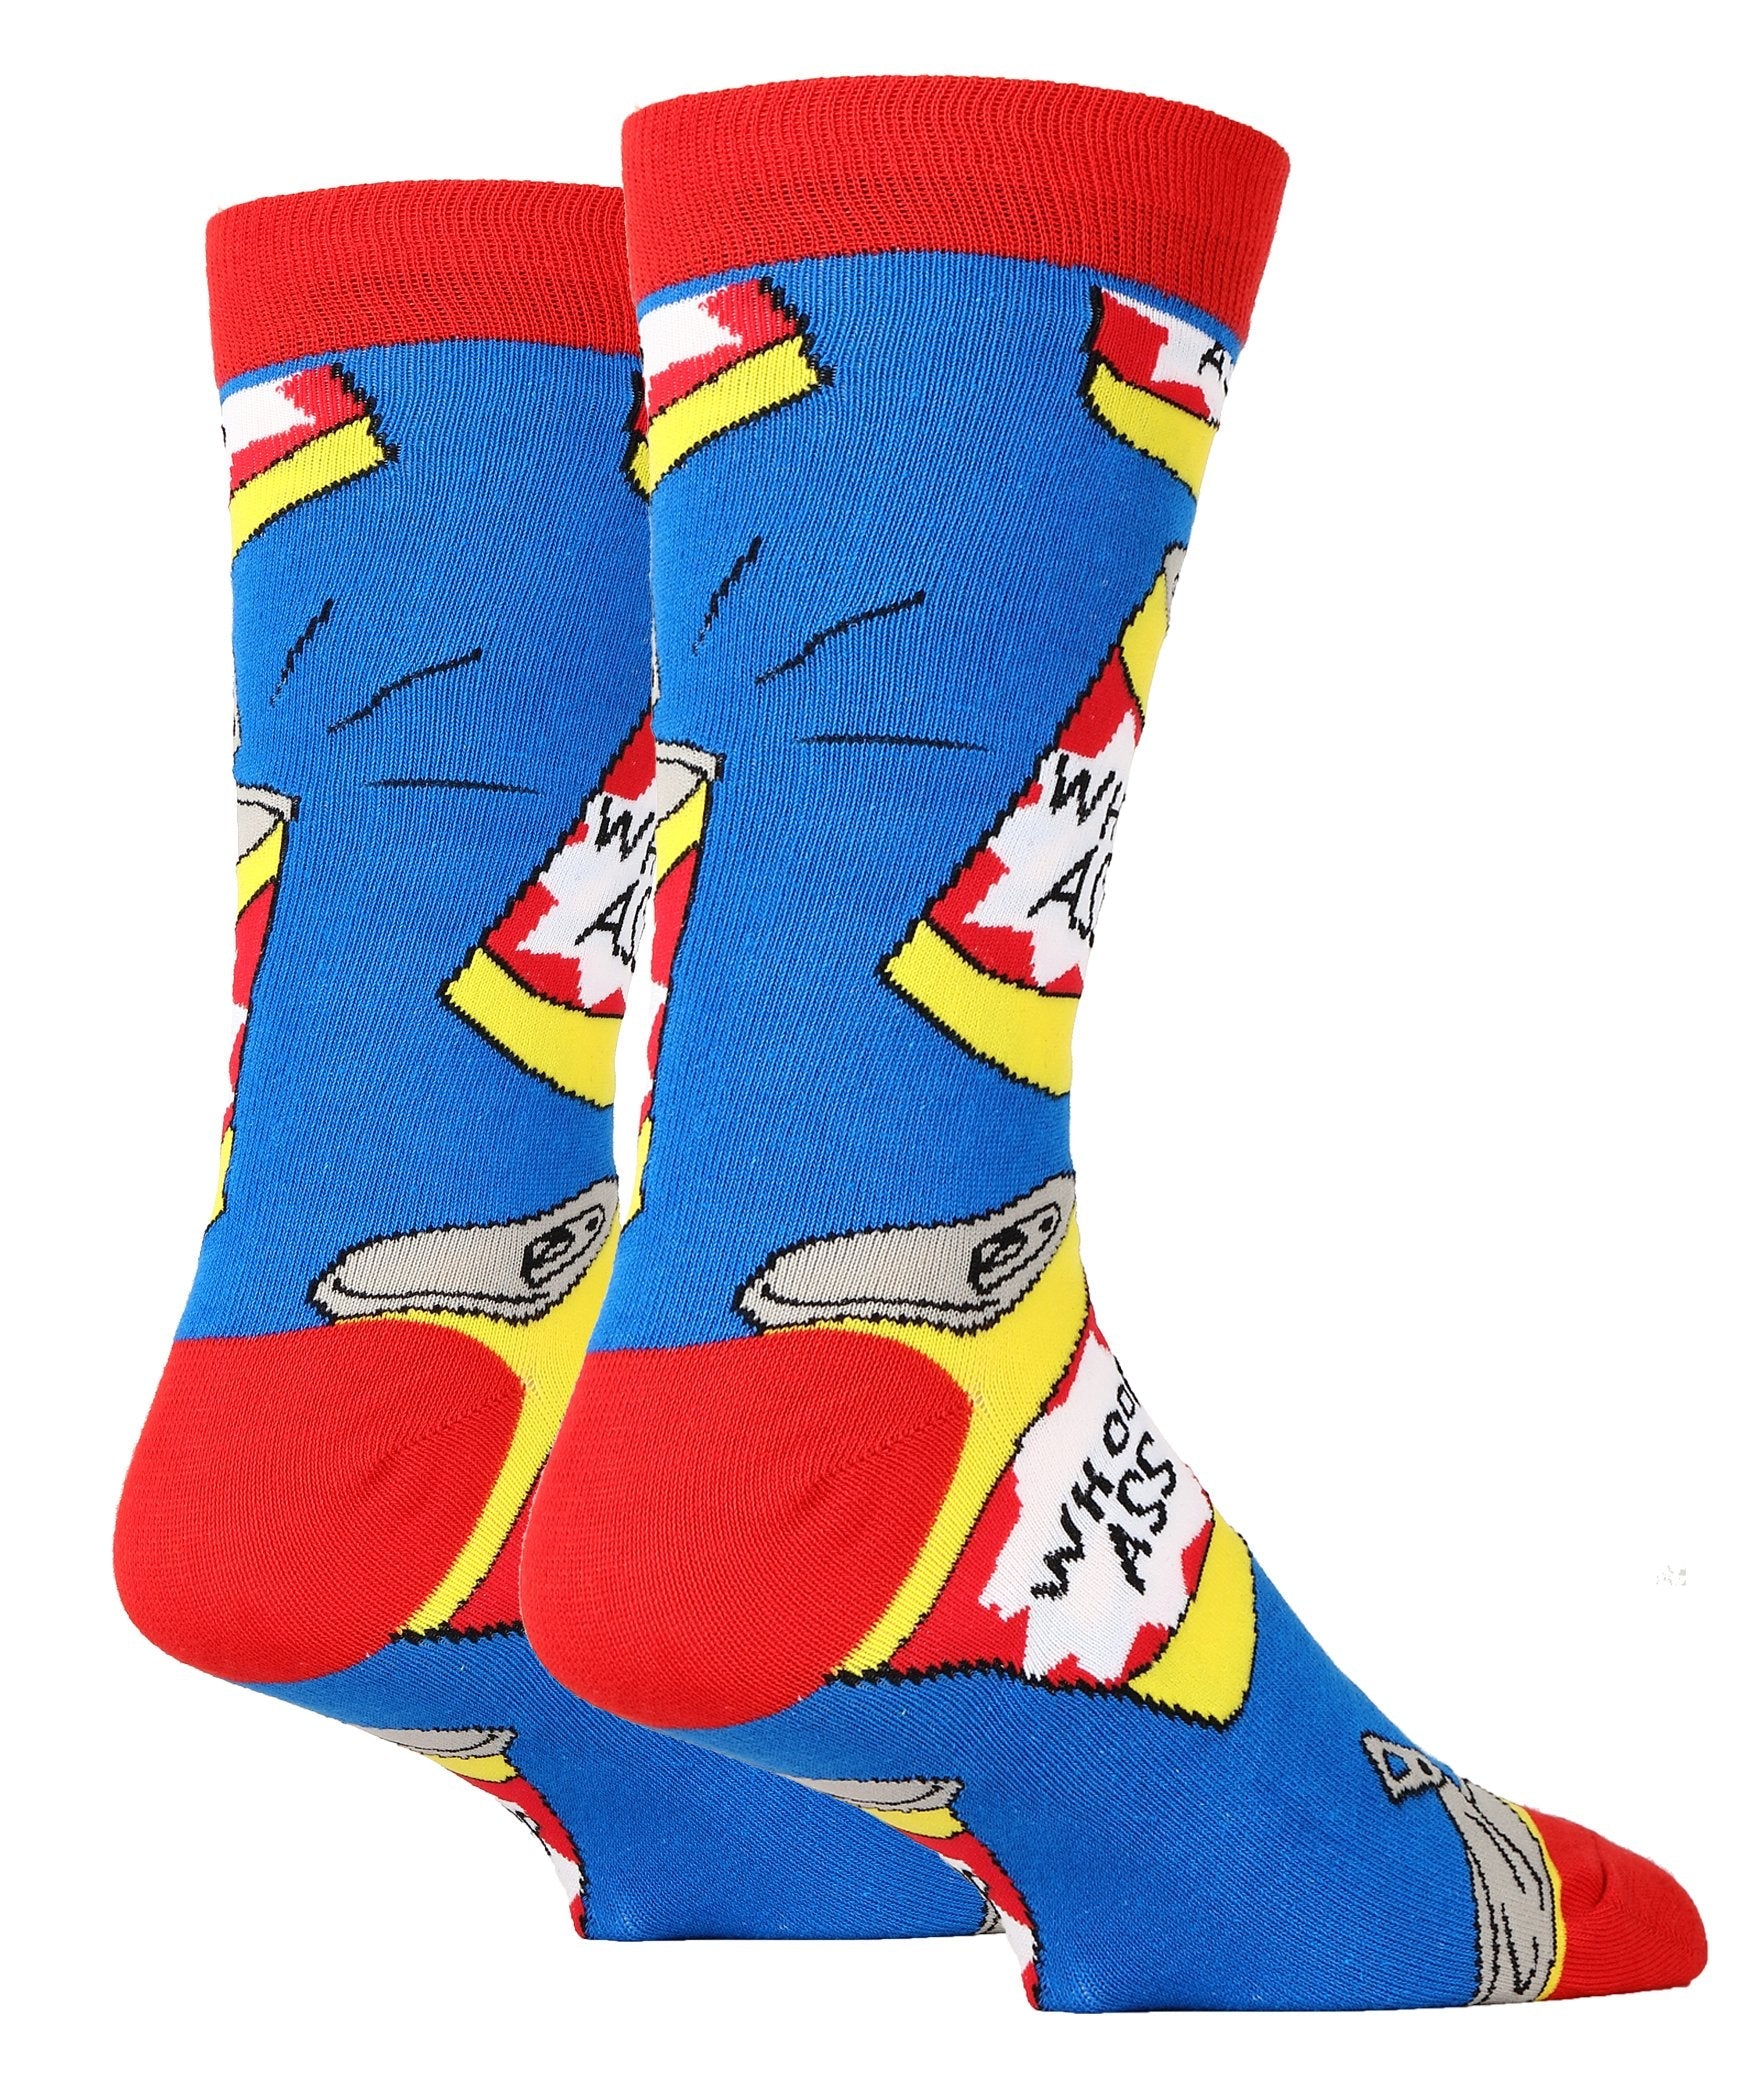 Funny Socks For Men, Hilarious Sock Designs